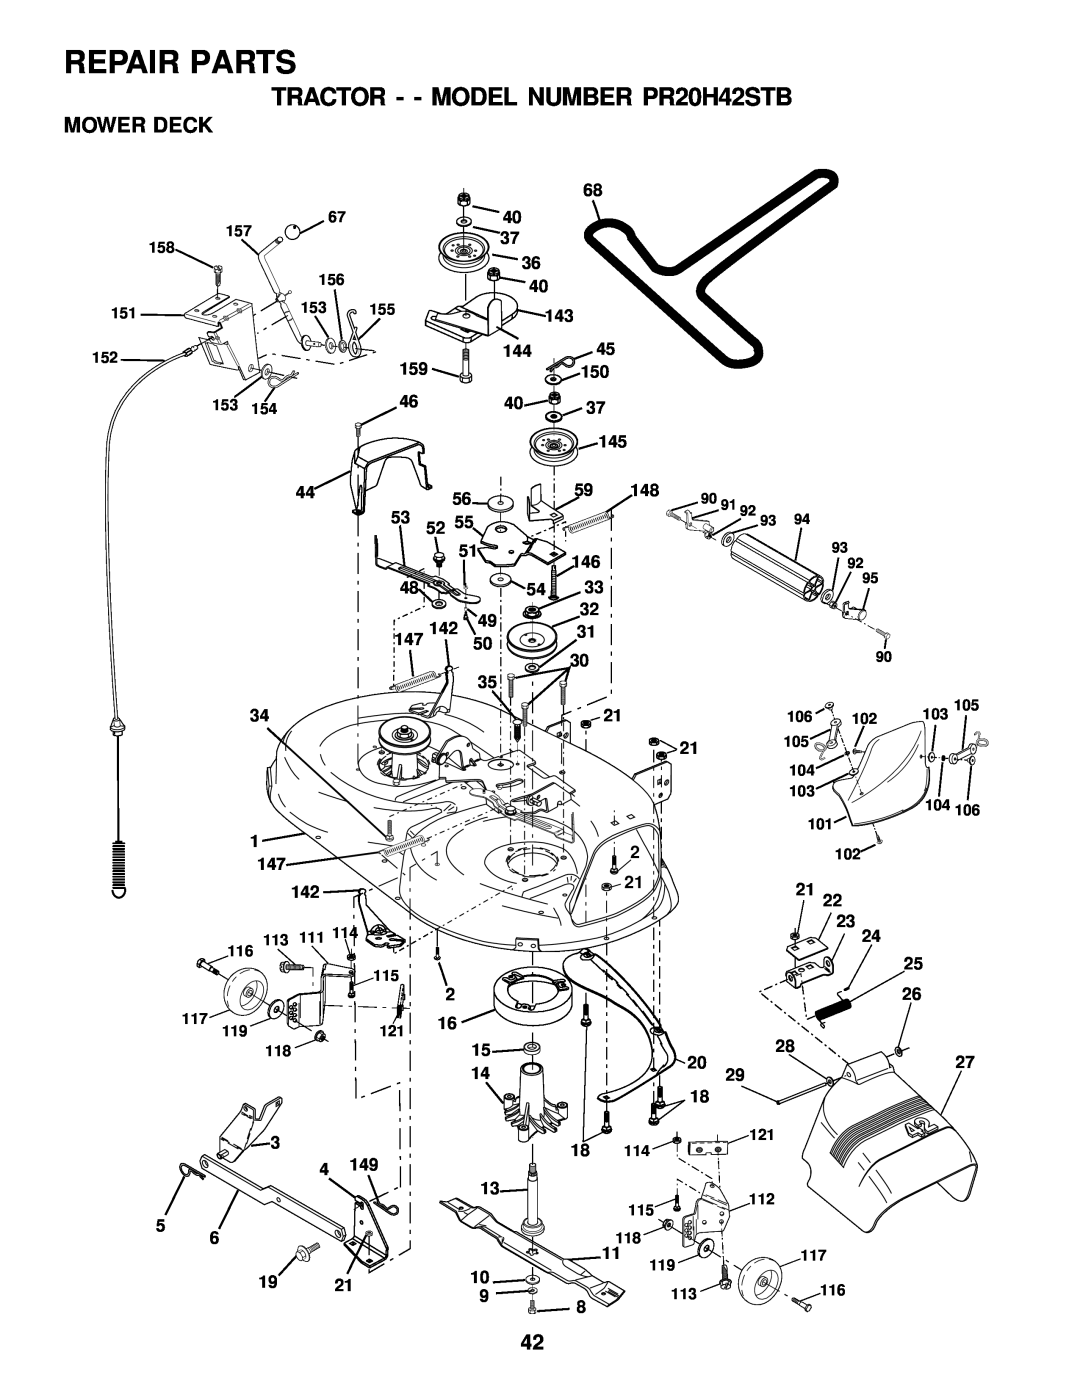 Poulan owner manual Mower Deck, Repair Parts, TRACTOR - - MODEL NUMBER PR20H42STB 